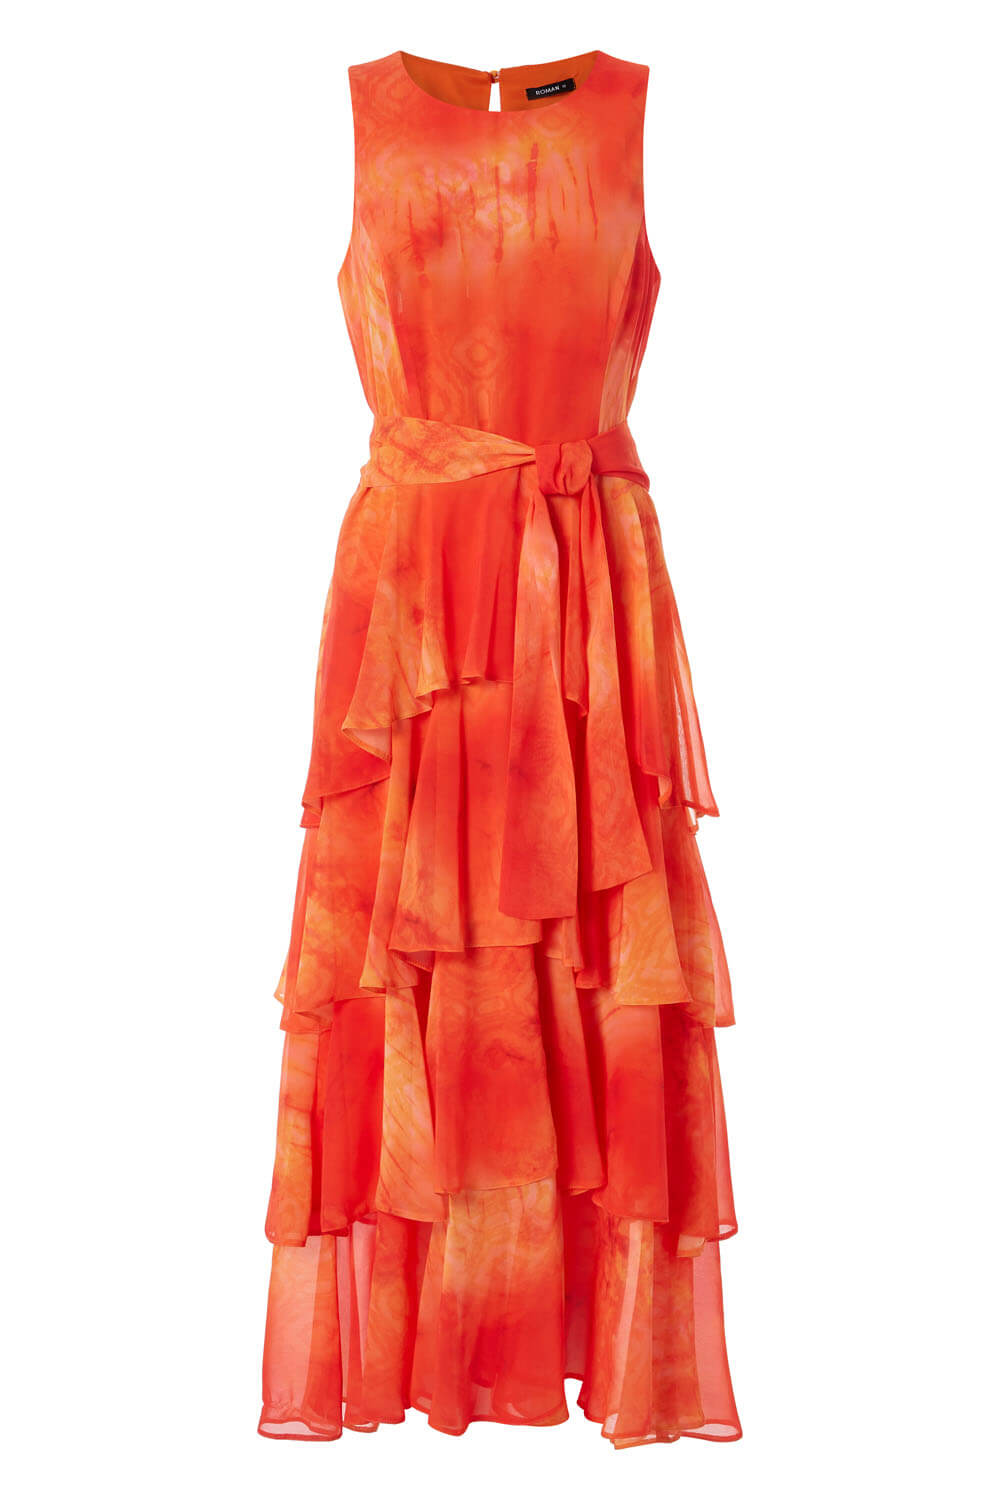 ORANGE Tie Dye Print Layer Midi Dress, Image 4 of 4